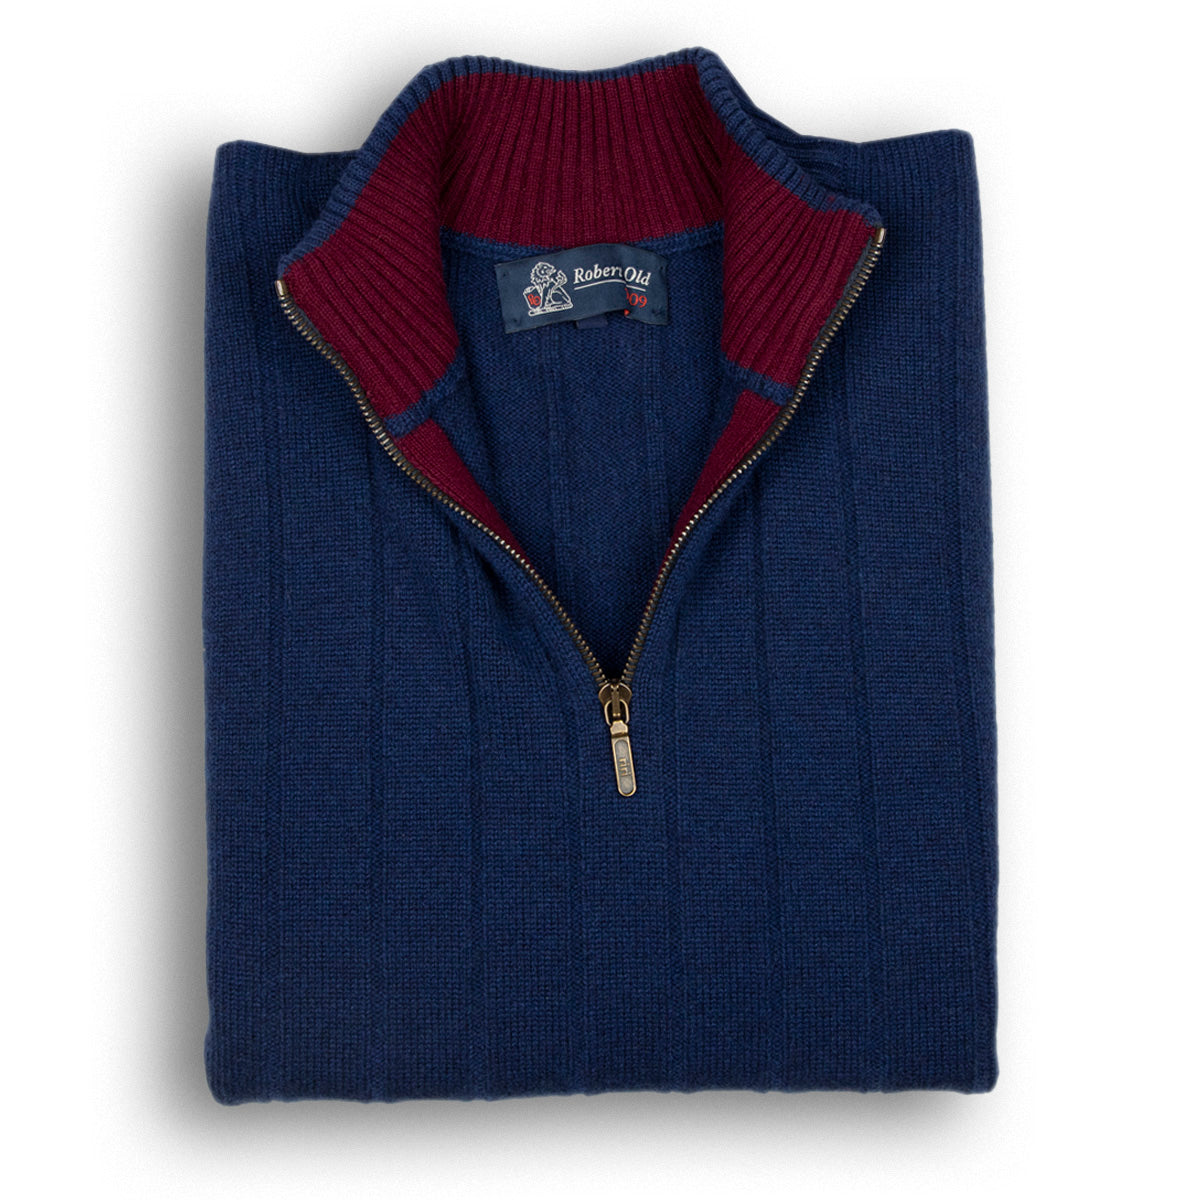 The Wellington Cashmere Ribbed Zip Neck Sweater - Inchiostro / Pompeii  Robert Old Inchiostro - Pompeii UK 52" 